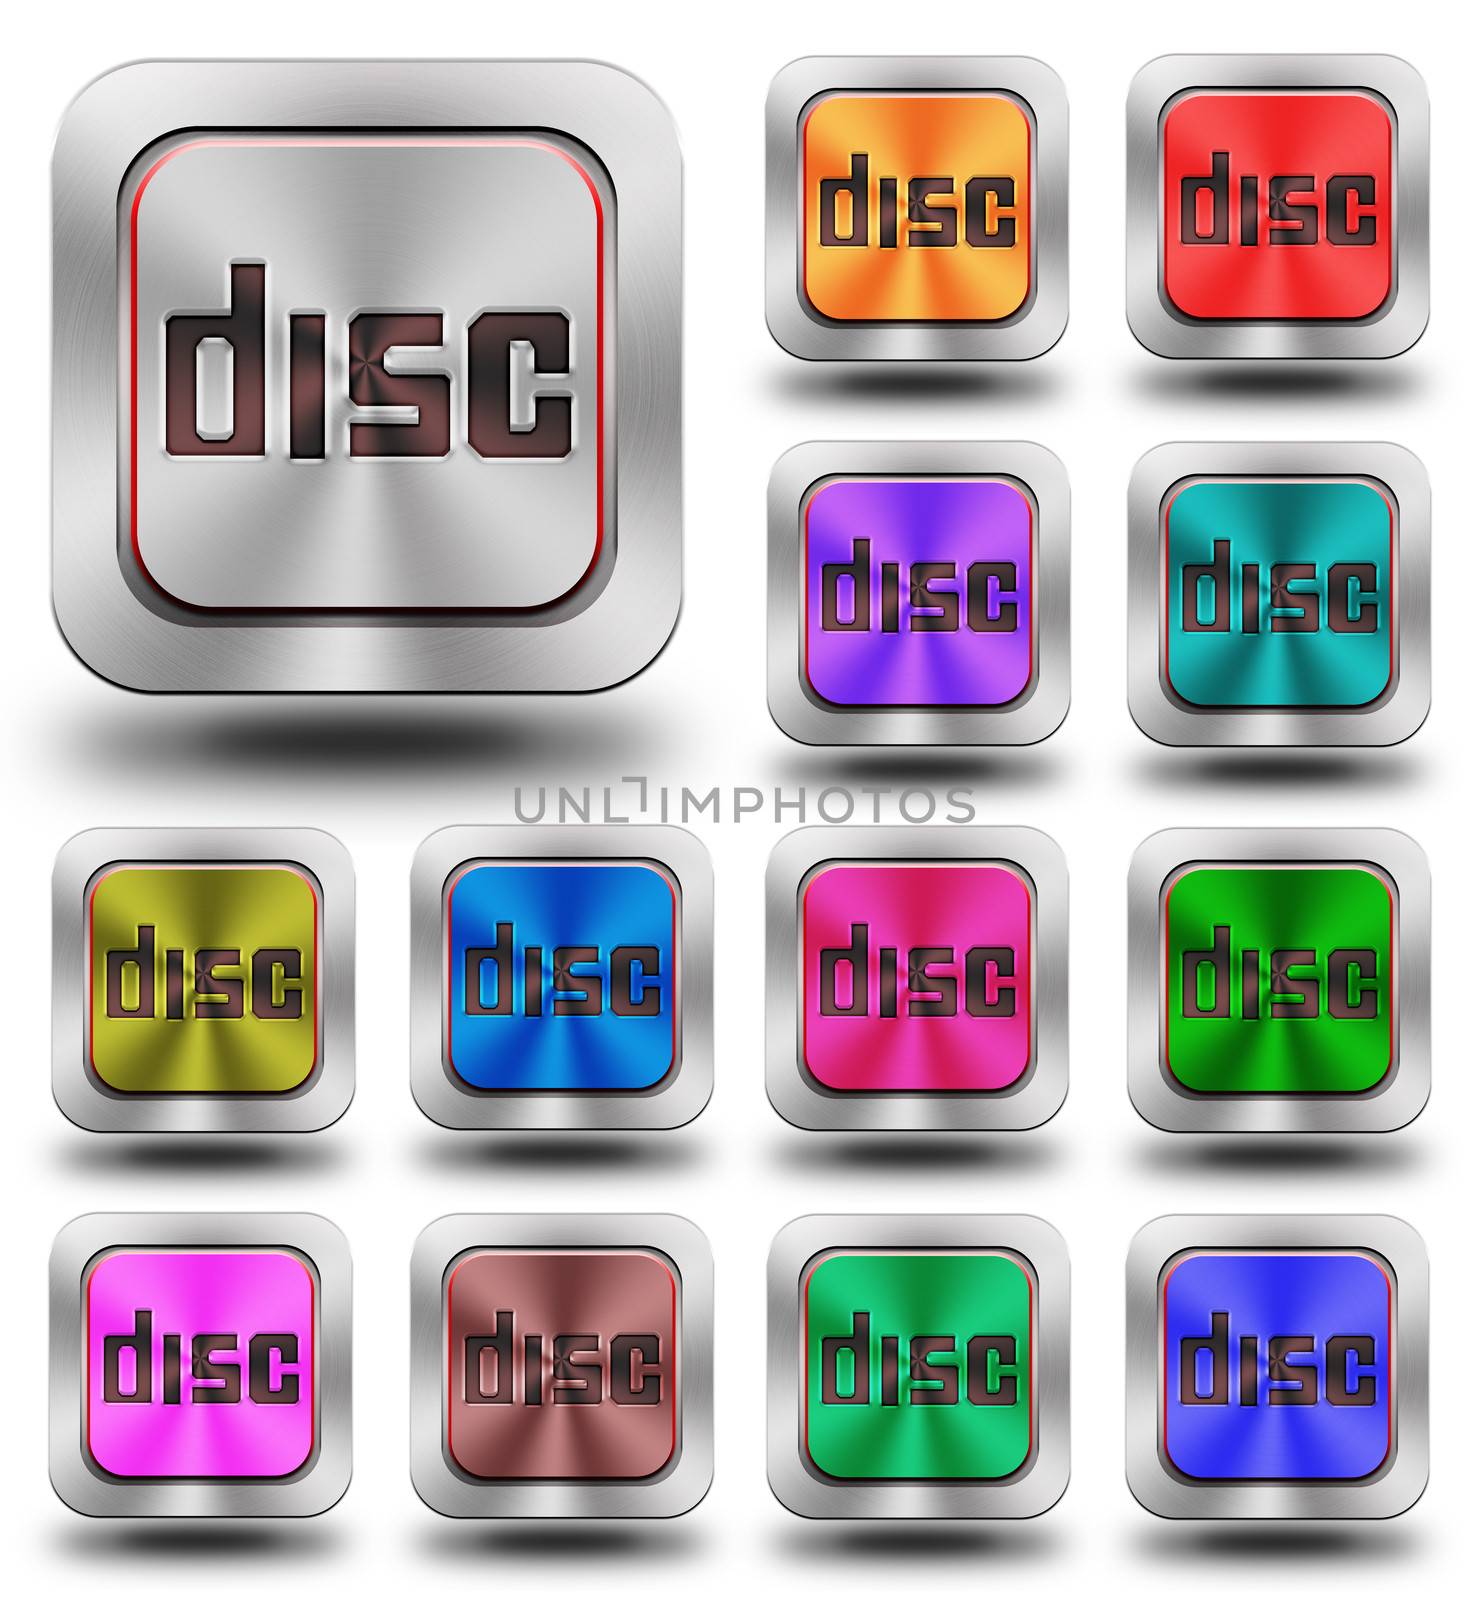 Disc aluminum glossy icons, crazy colors by konradkerker